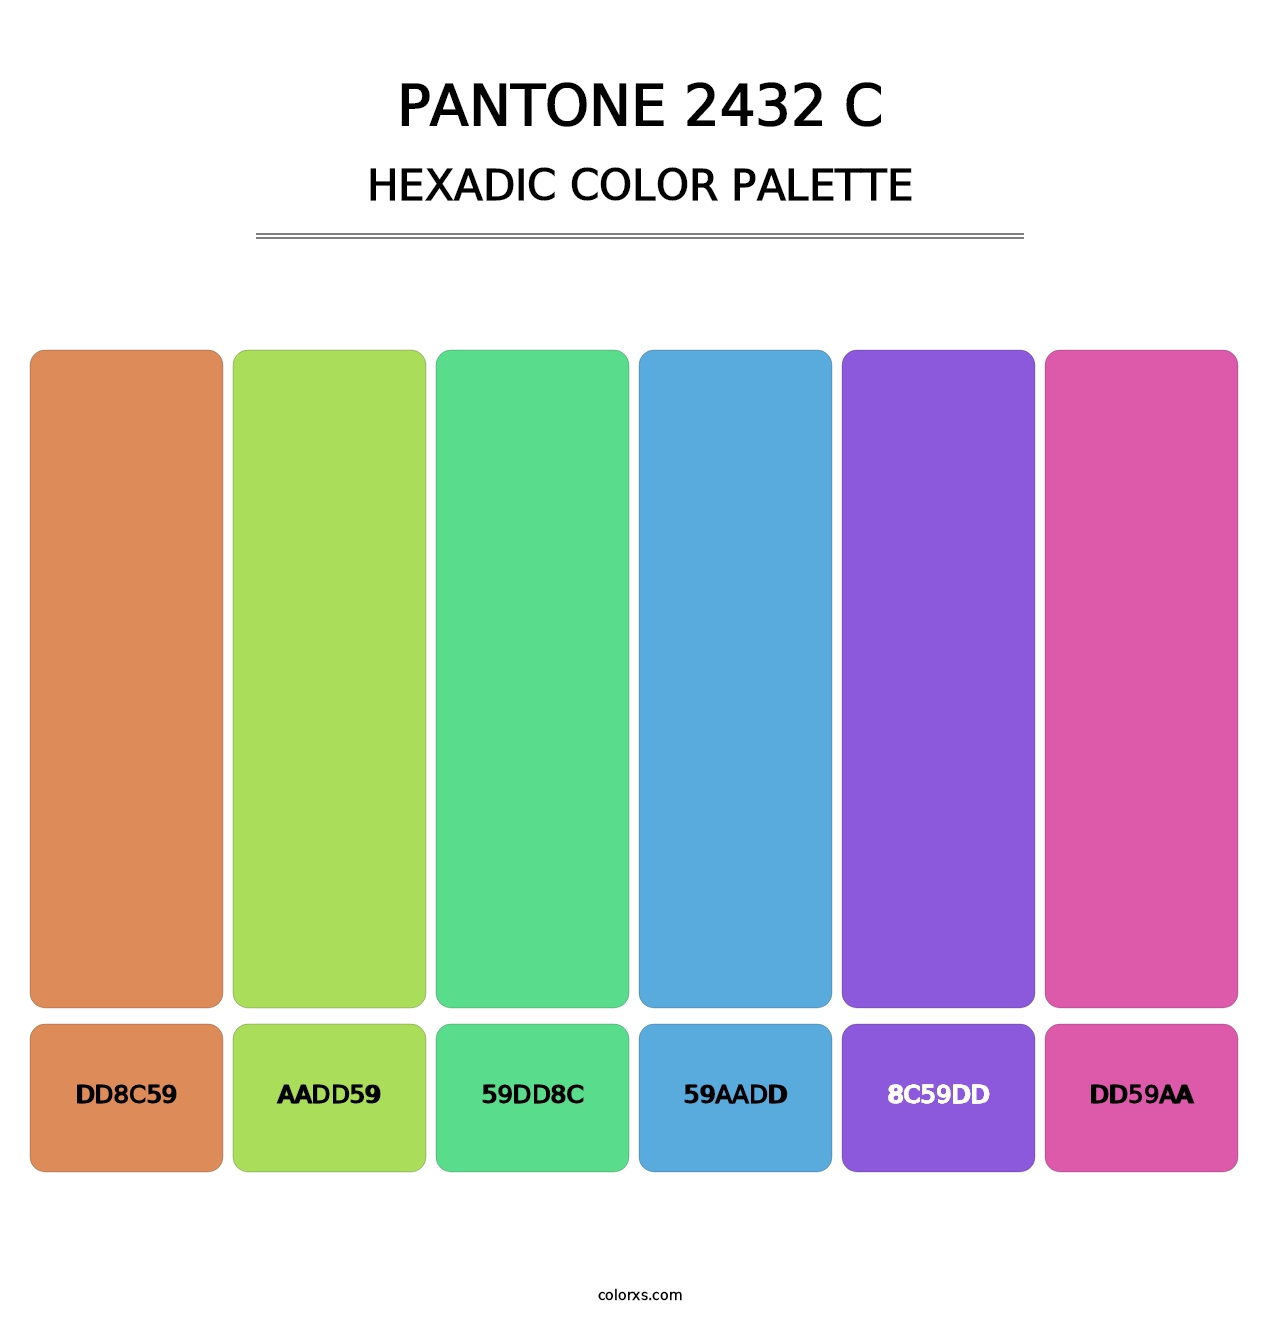 PANTONE 2432 C - Hexadic Color Palette